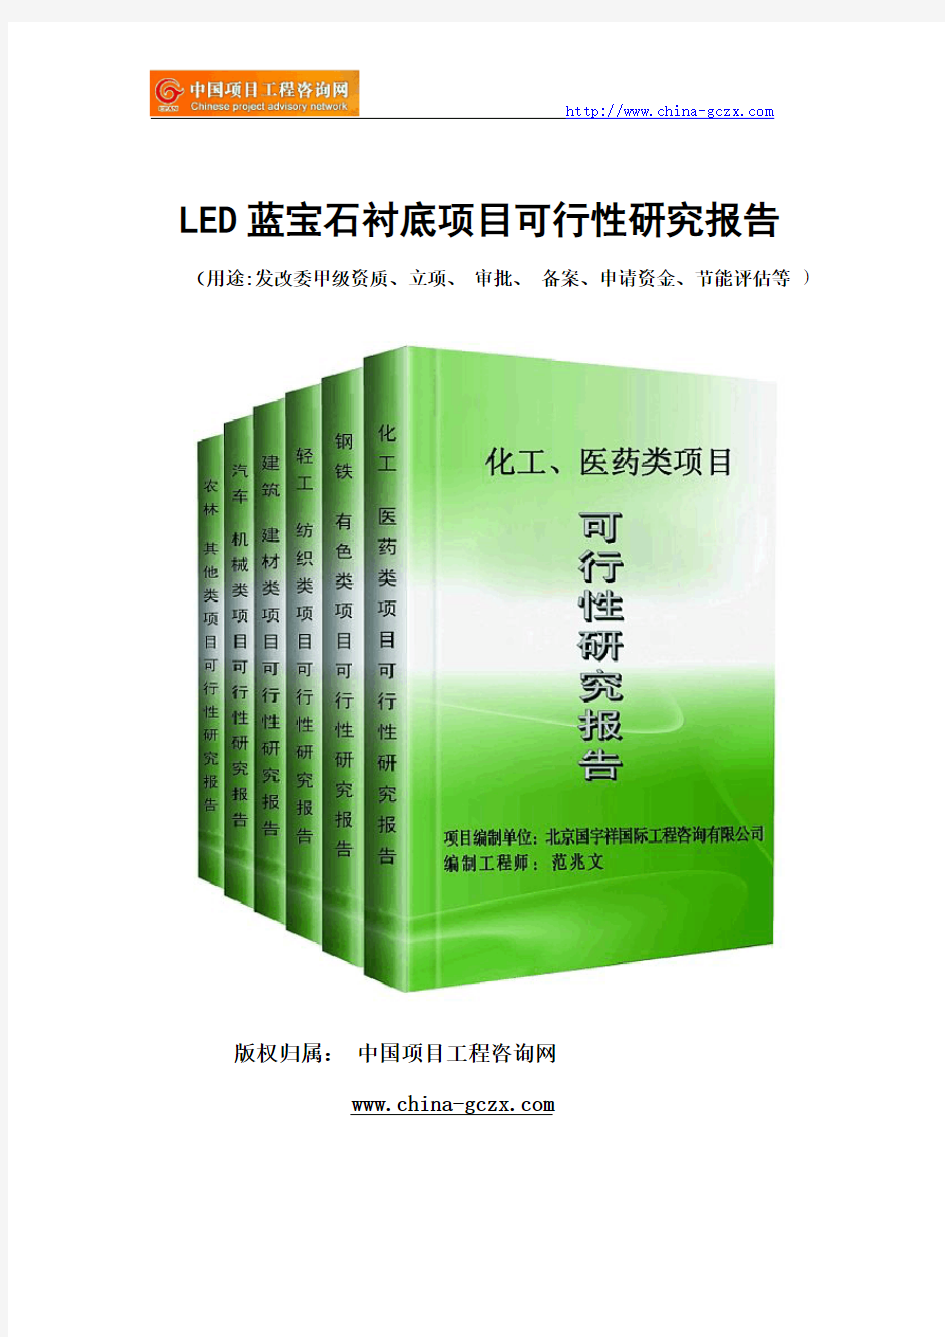 LED蓝宝石衬底项目可行性研究报告(专业经典案例)